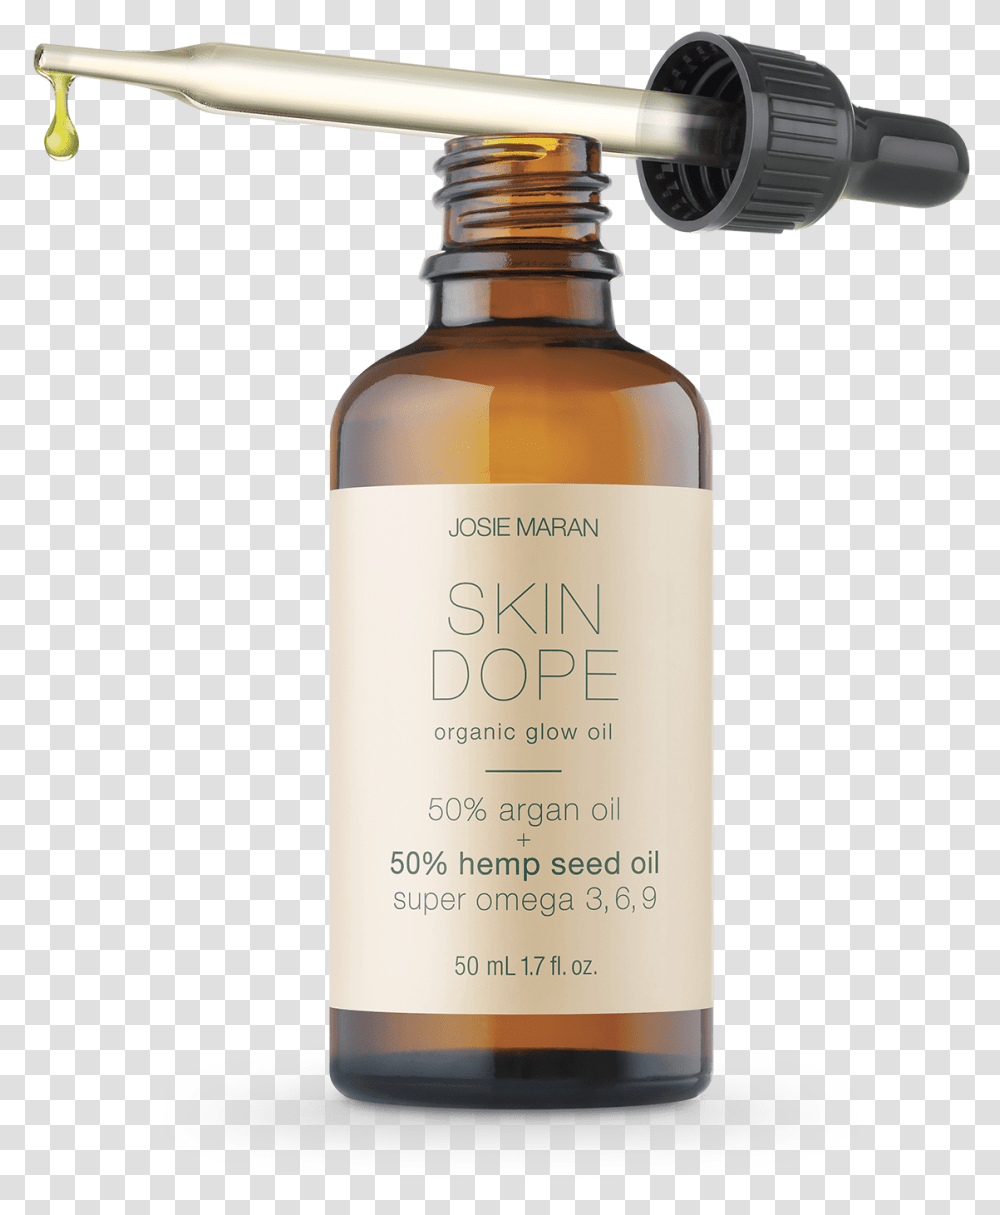 Skin Dope Argan Oil Hemp Seed Oil Josie Maran Skin Dope, Bottle, Shaker, Cosmetics, Aluminium Transparent Png